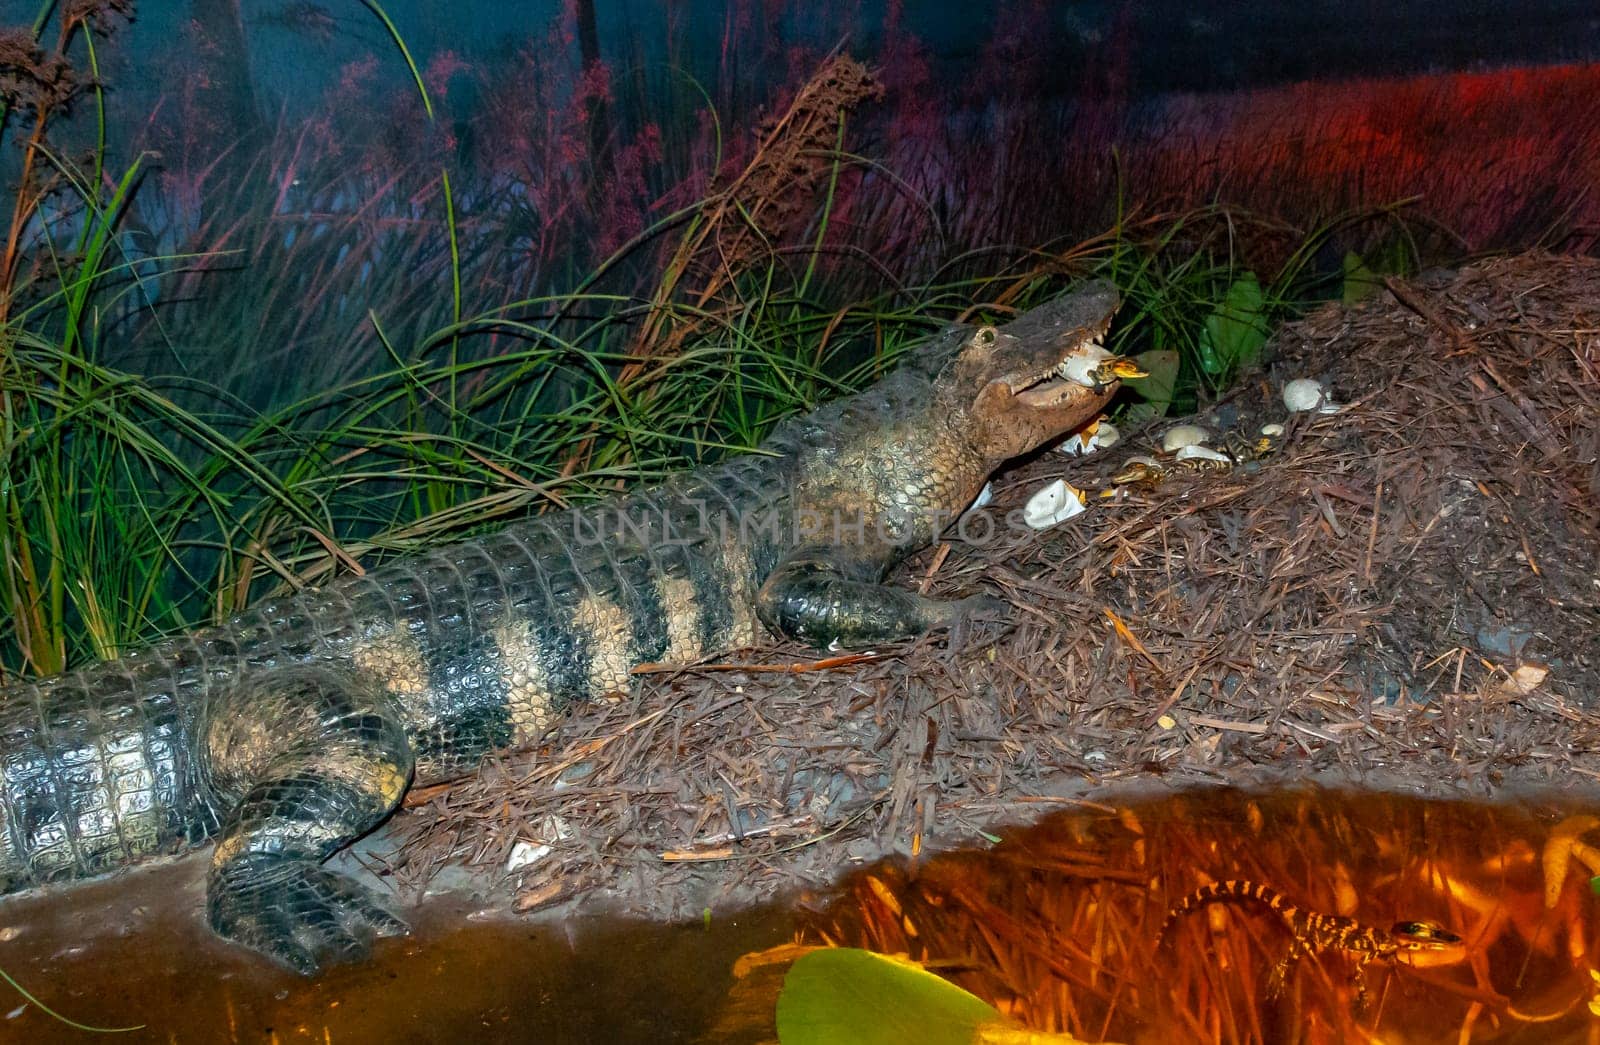 USA, FLORIDA - NOVEMBER 30, 2011: Mississippi alligator in the interior of the visitor center of Okefenoke Park, Florida